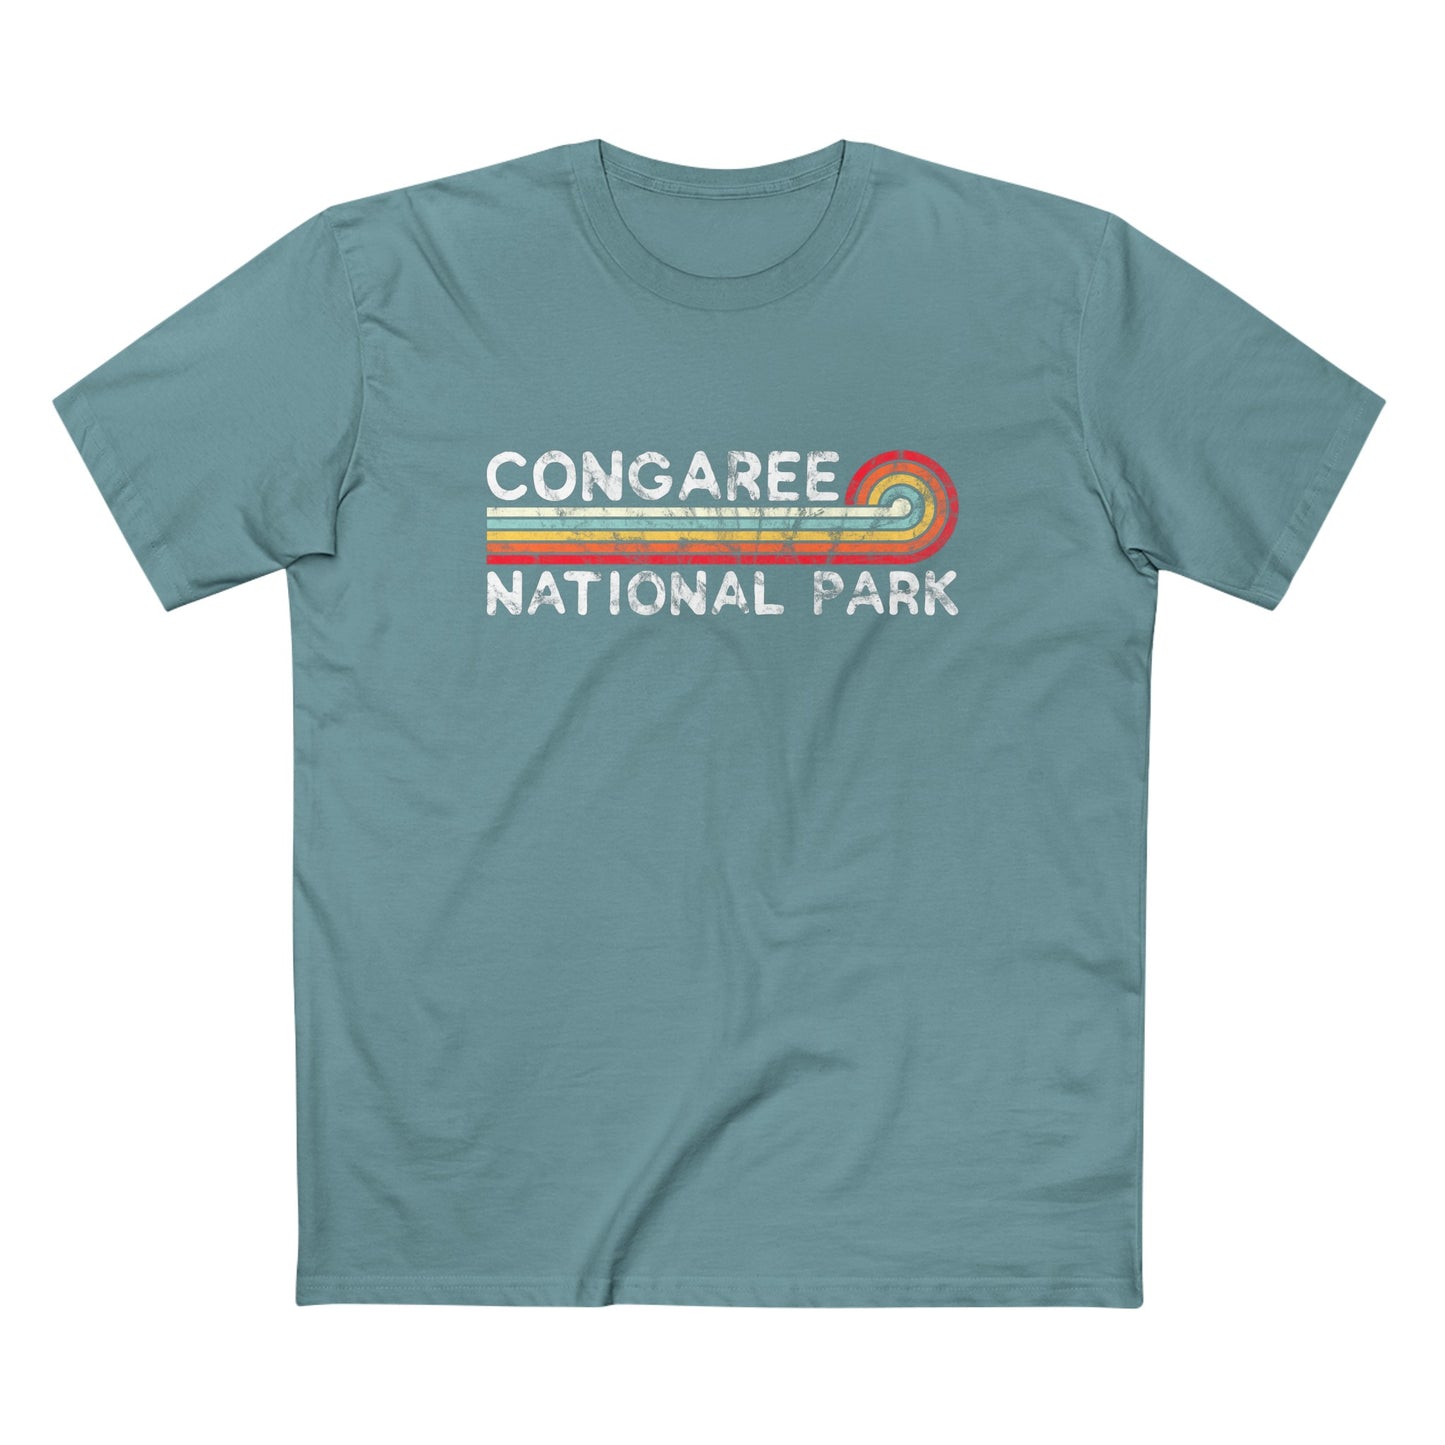 Congaree National Park T-Shirt - Vintage Stretched Sunrise